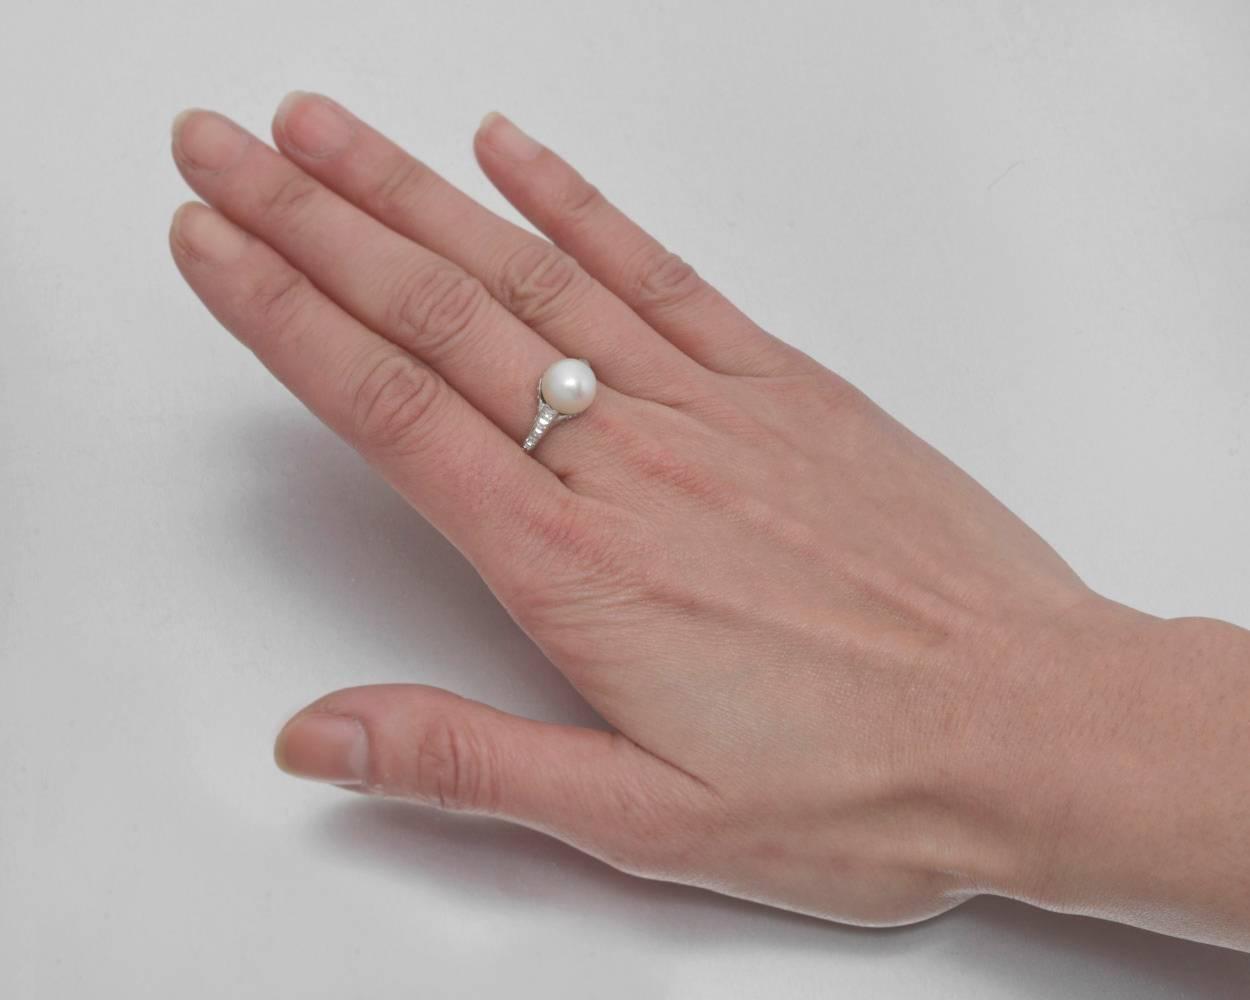 pearl engagement rings tiffany